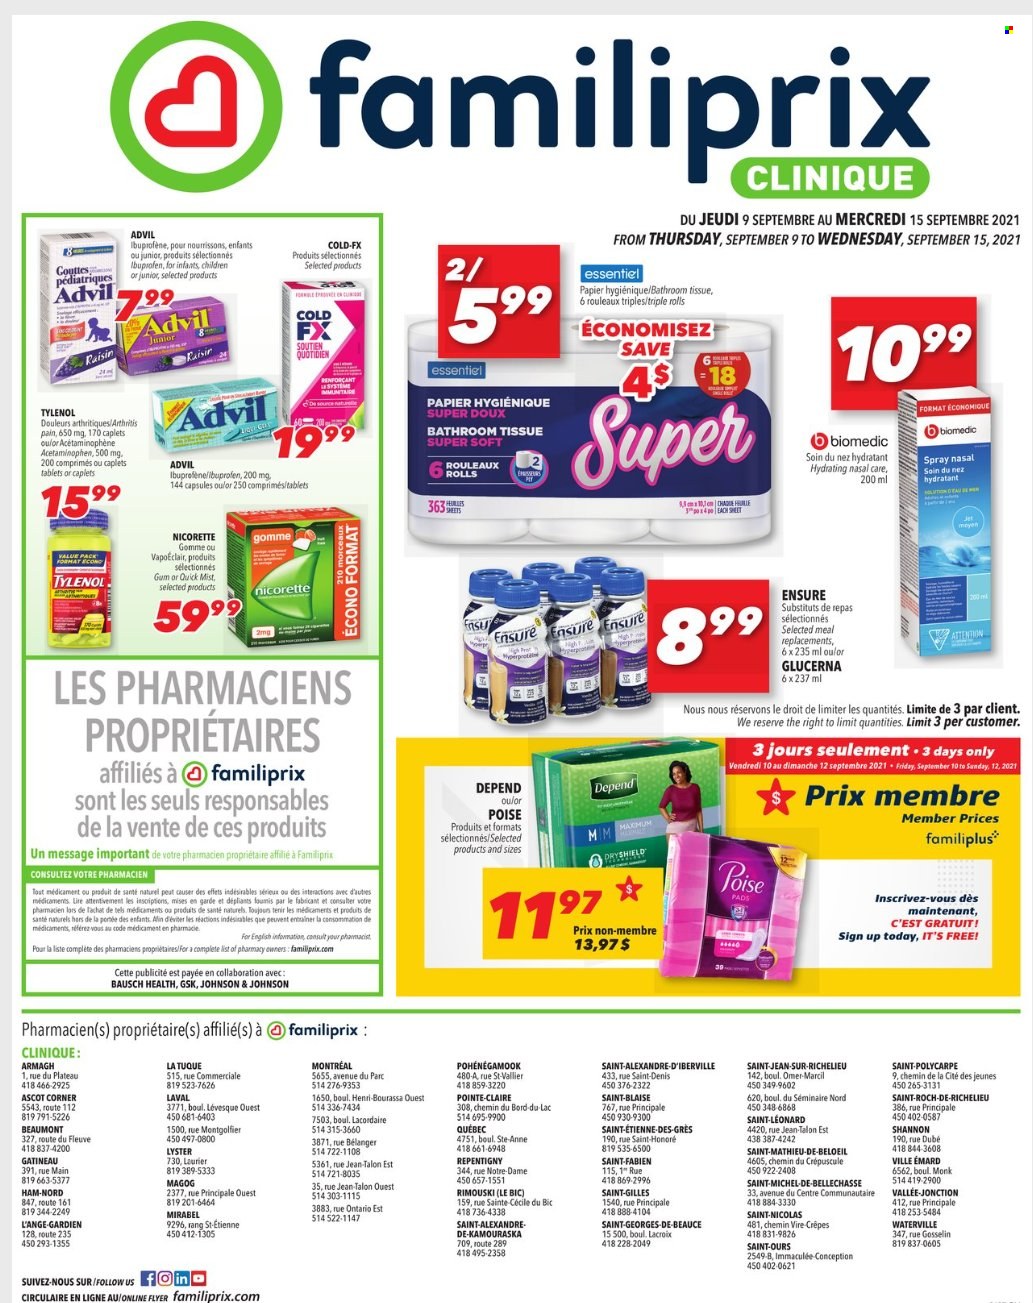 thumbnail - Familiprix Clinique Flyer - September 09, 2021 - September 15, 2021 - Sales products - Johnson's, bath tissue, Clinique, BIC, Nicorette, Tylenol, Glucerna, Advil Rapid. Page 1.